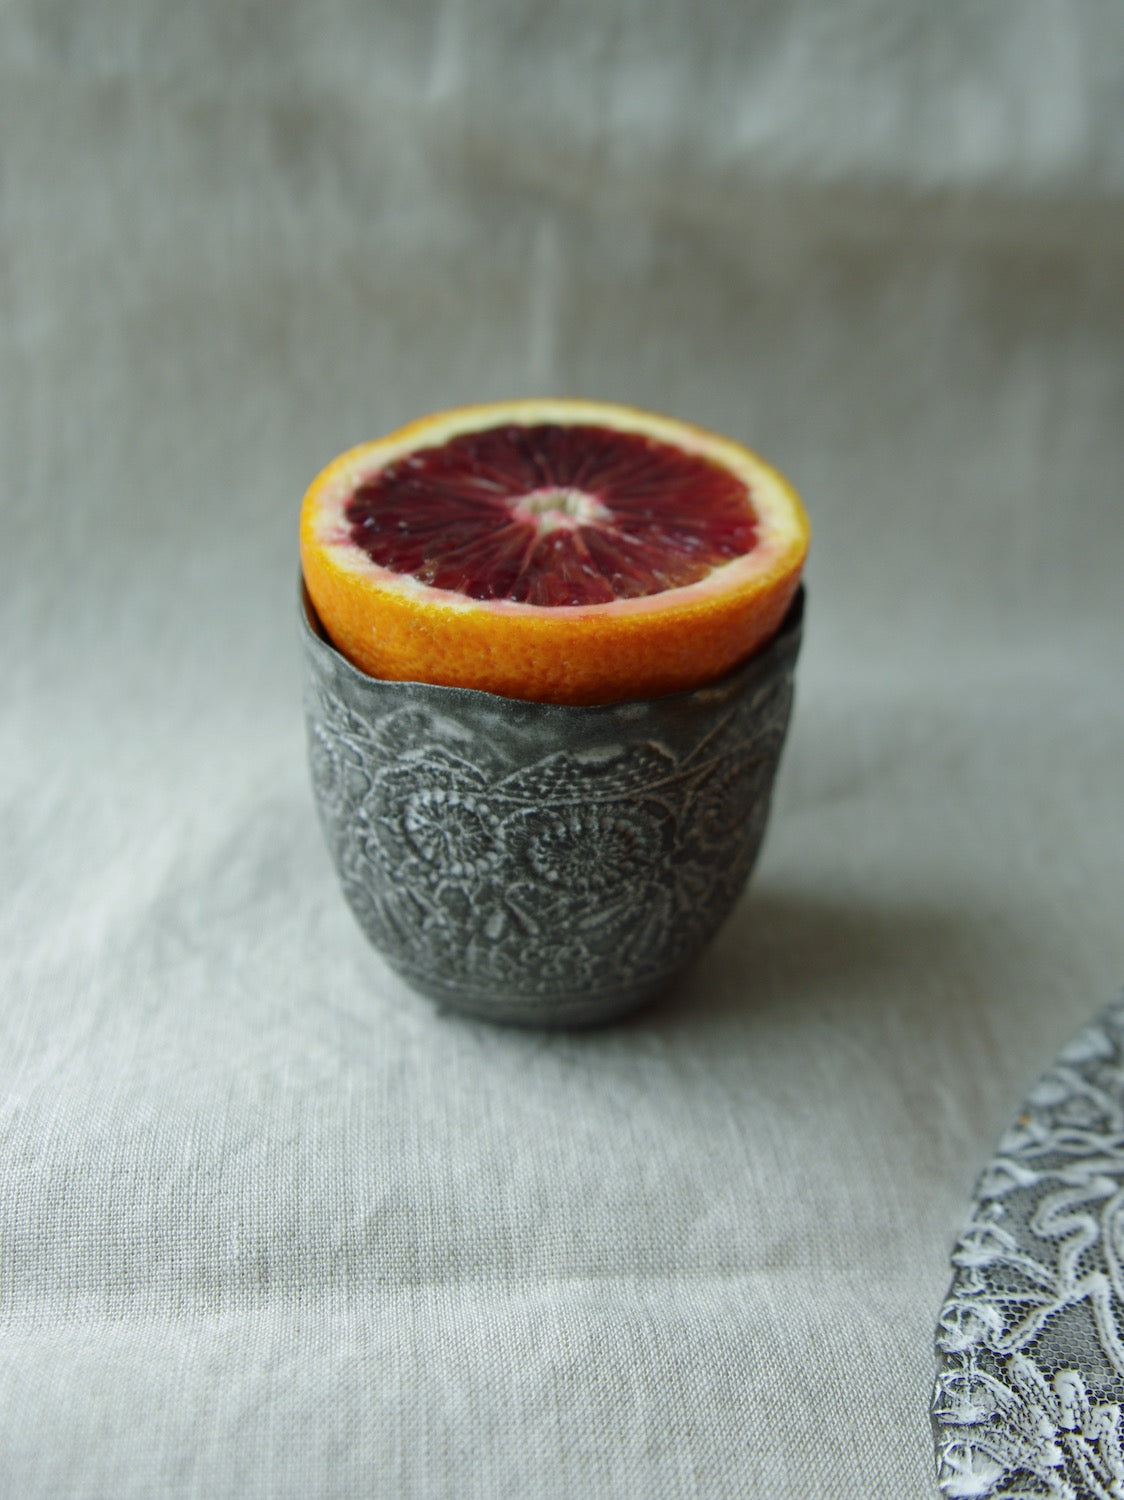 Grapefruit slice sitting atop lace pattern ceramic cup